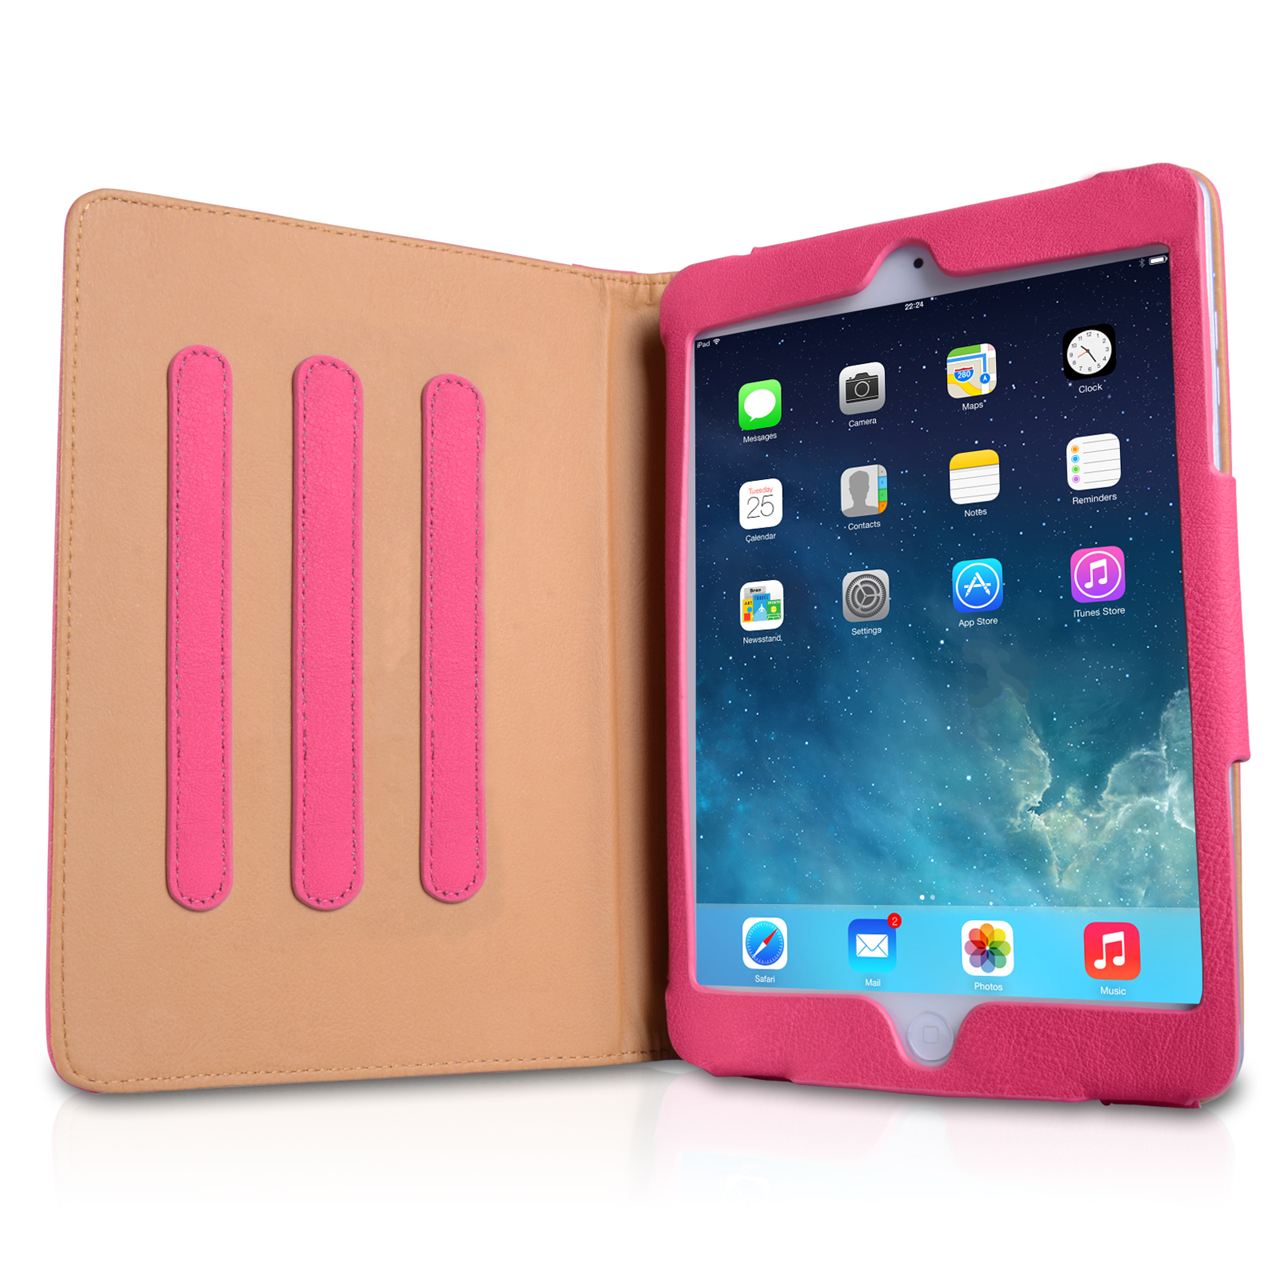 Caseflex iPad Mini 2 Textured Faux Leather Flip Case Hot Pink and Tan